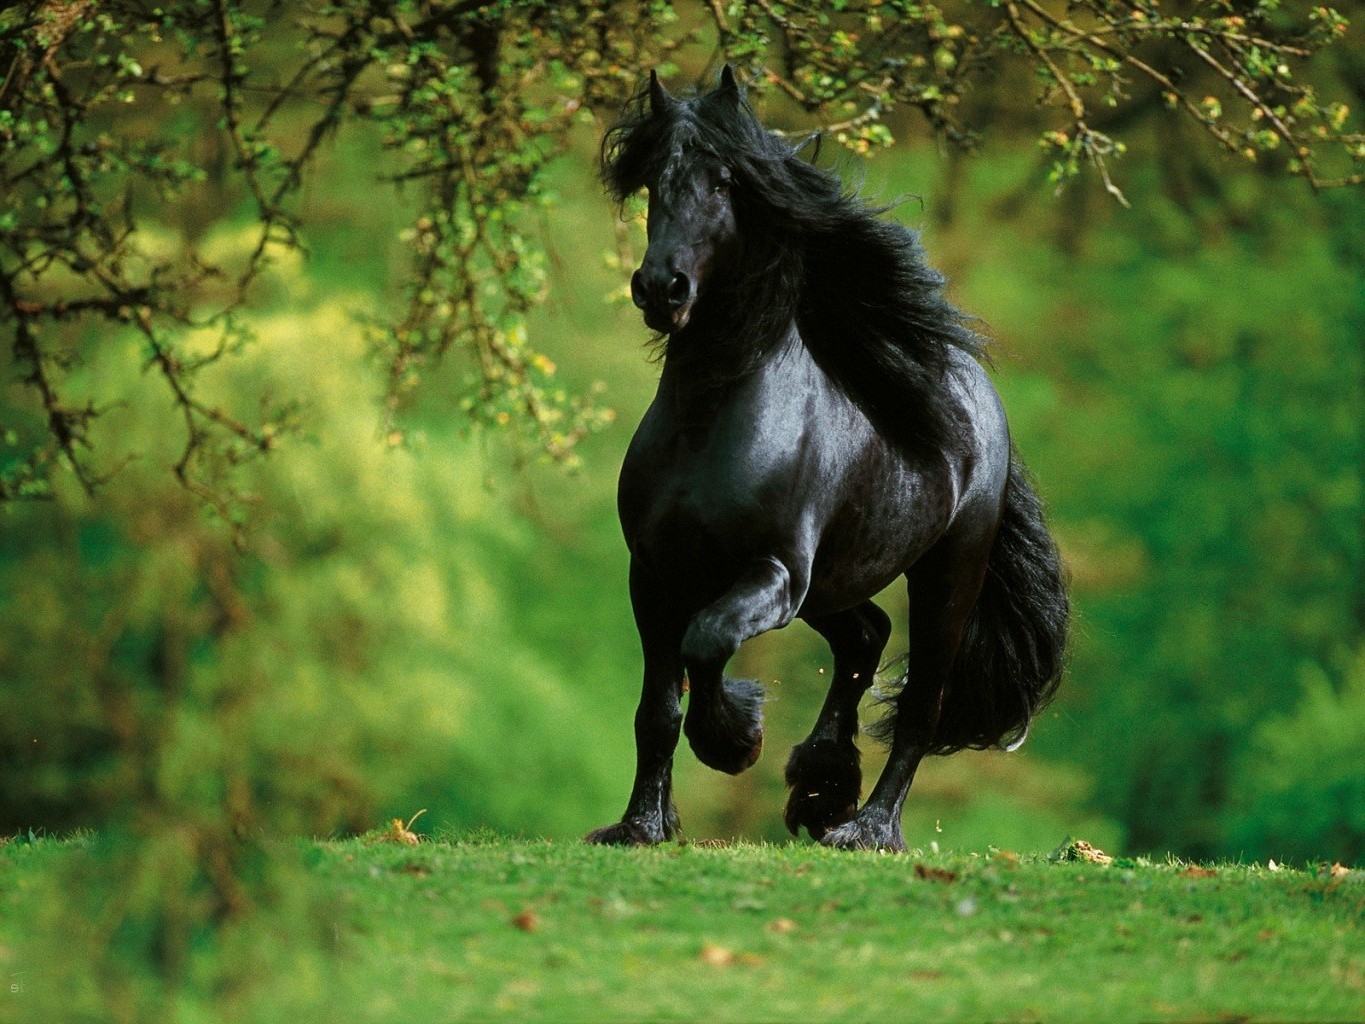 horses mammal animal grass cavalry wildlife mane mare nature wild outdoors portrait horse